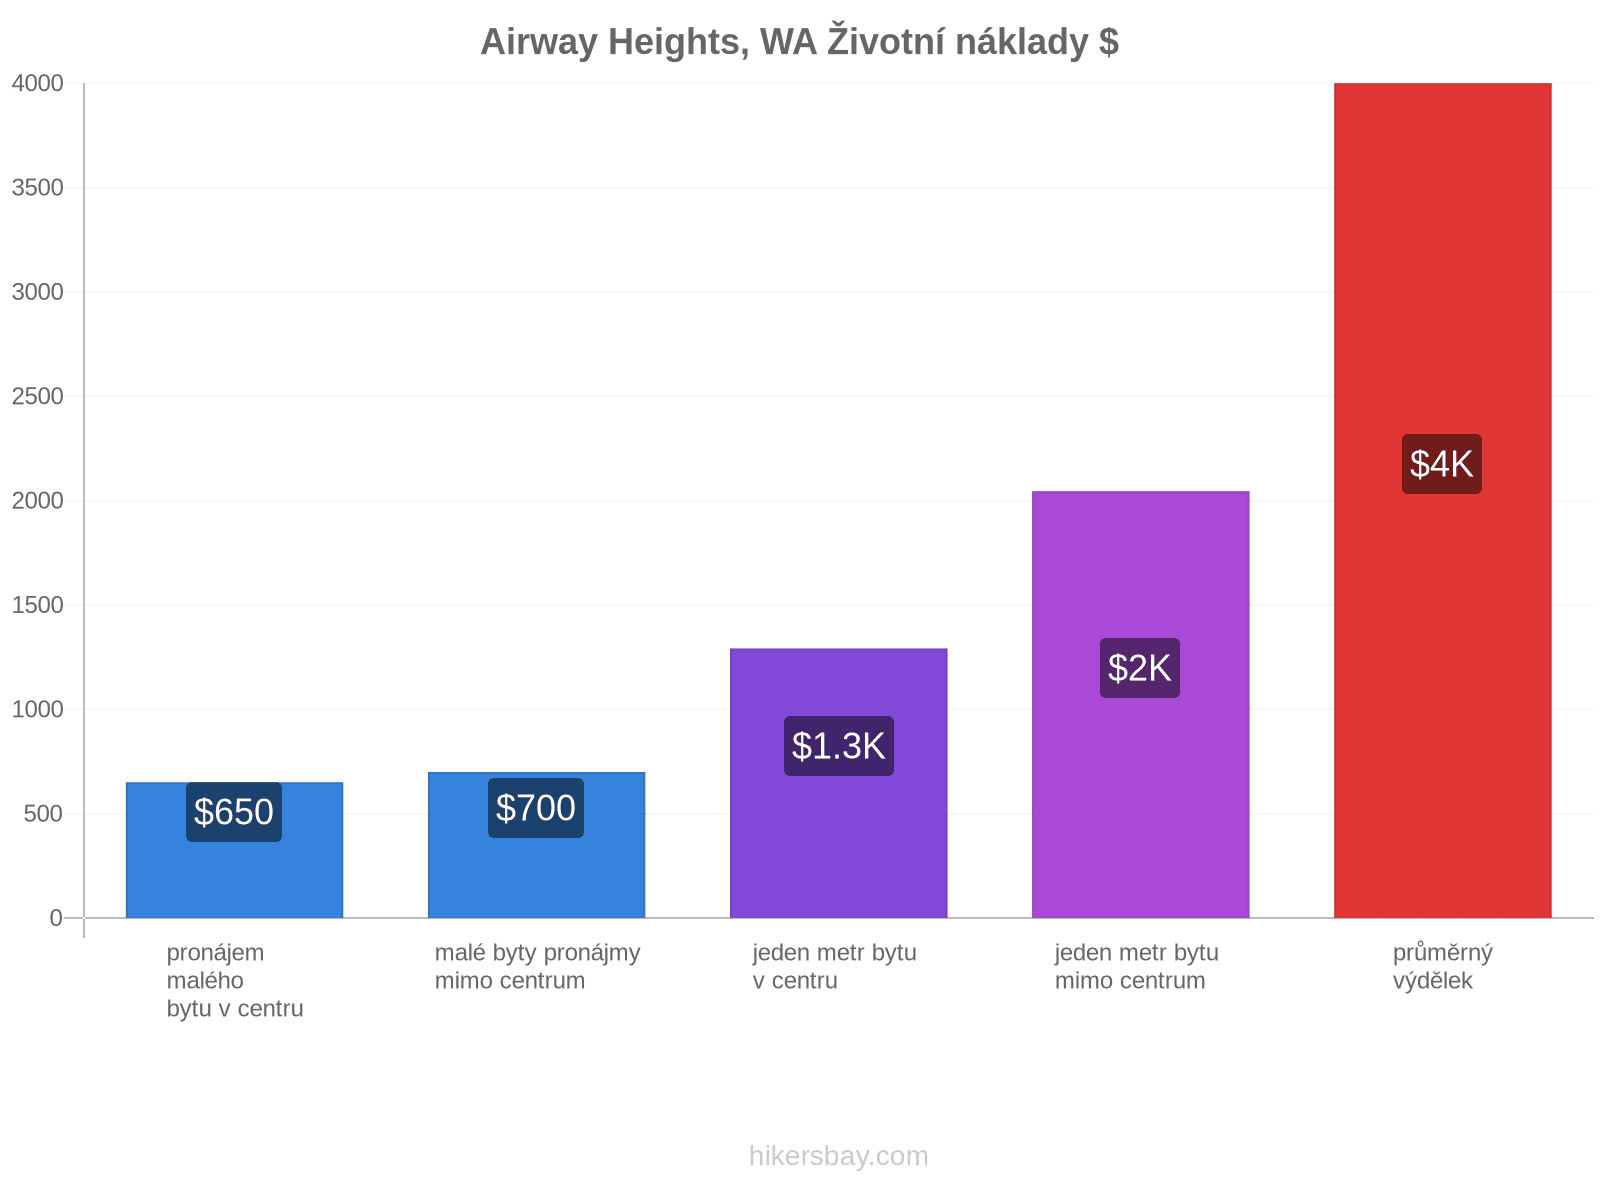 Airway Heights, WA životní náklady hikersbay.com